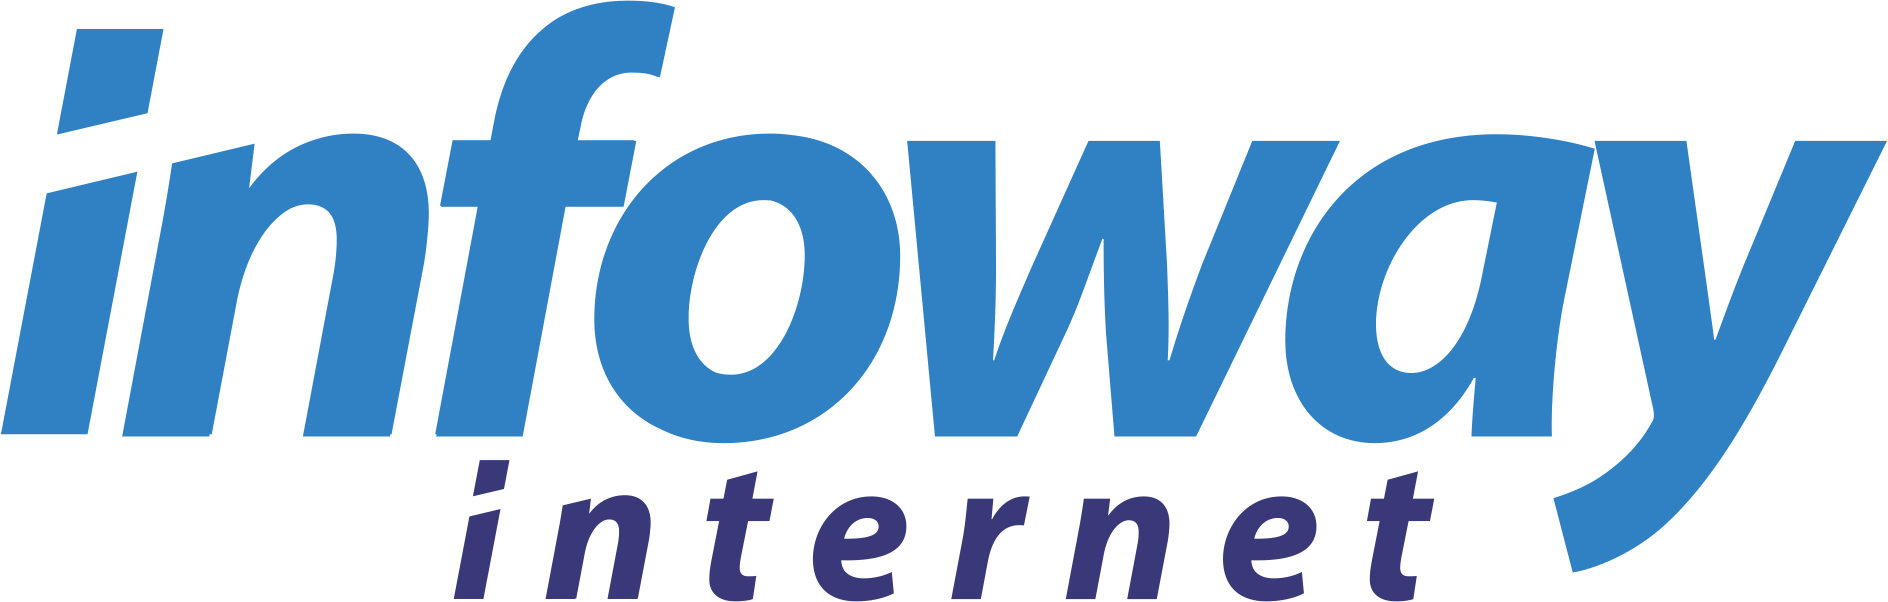 Infoway logo 2015